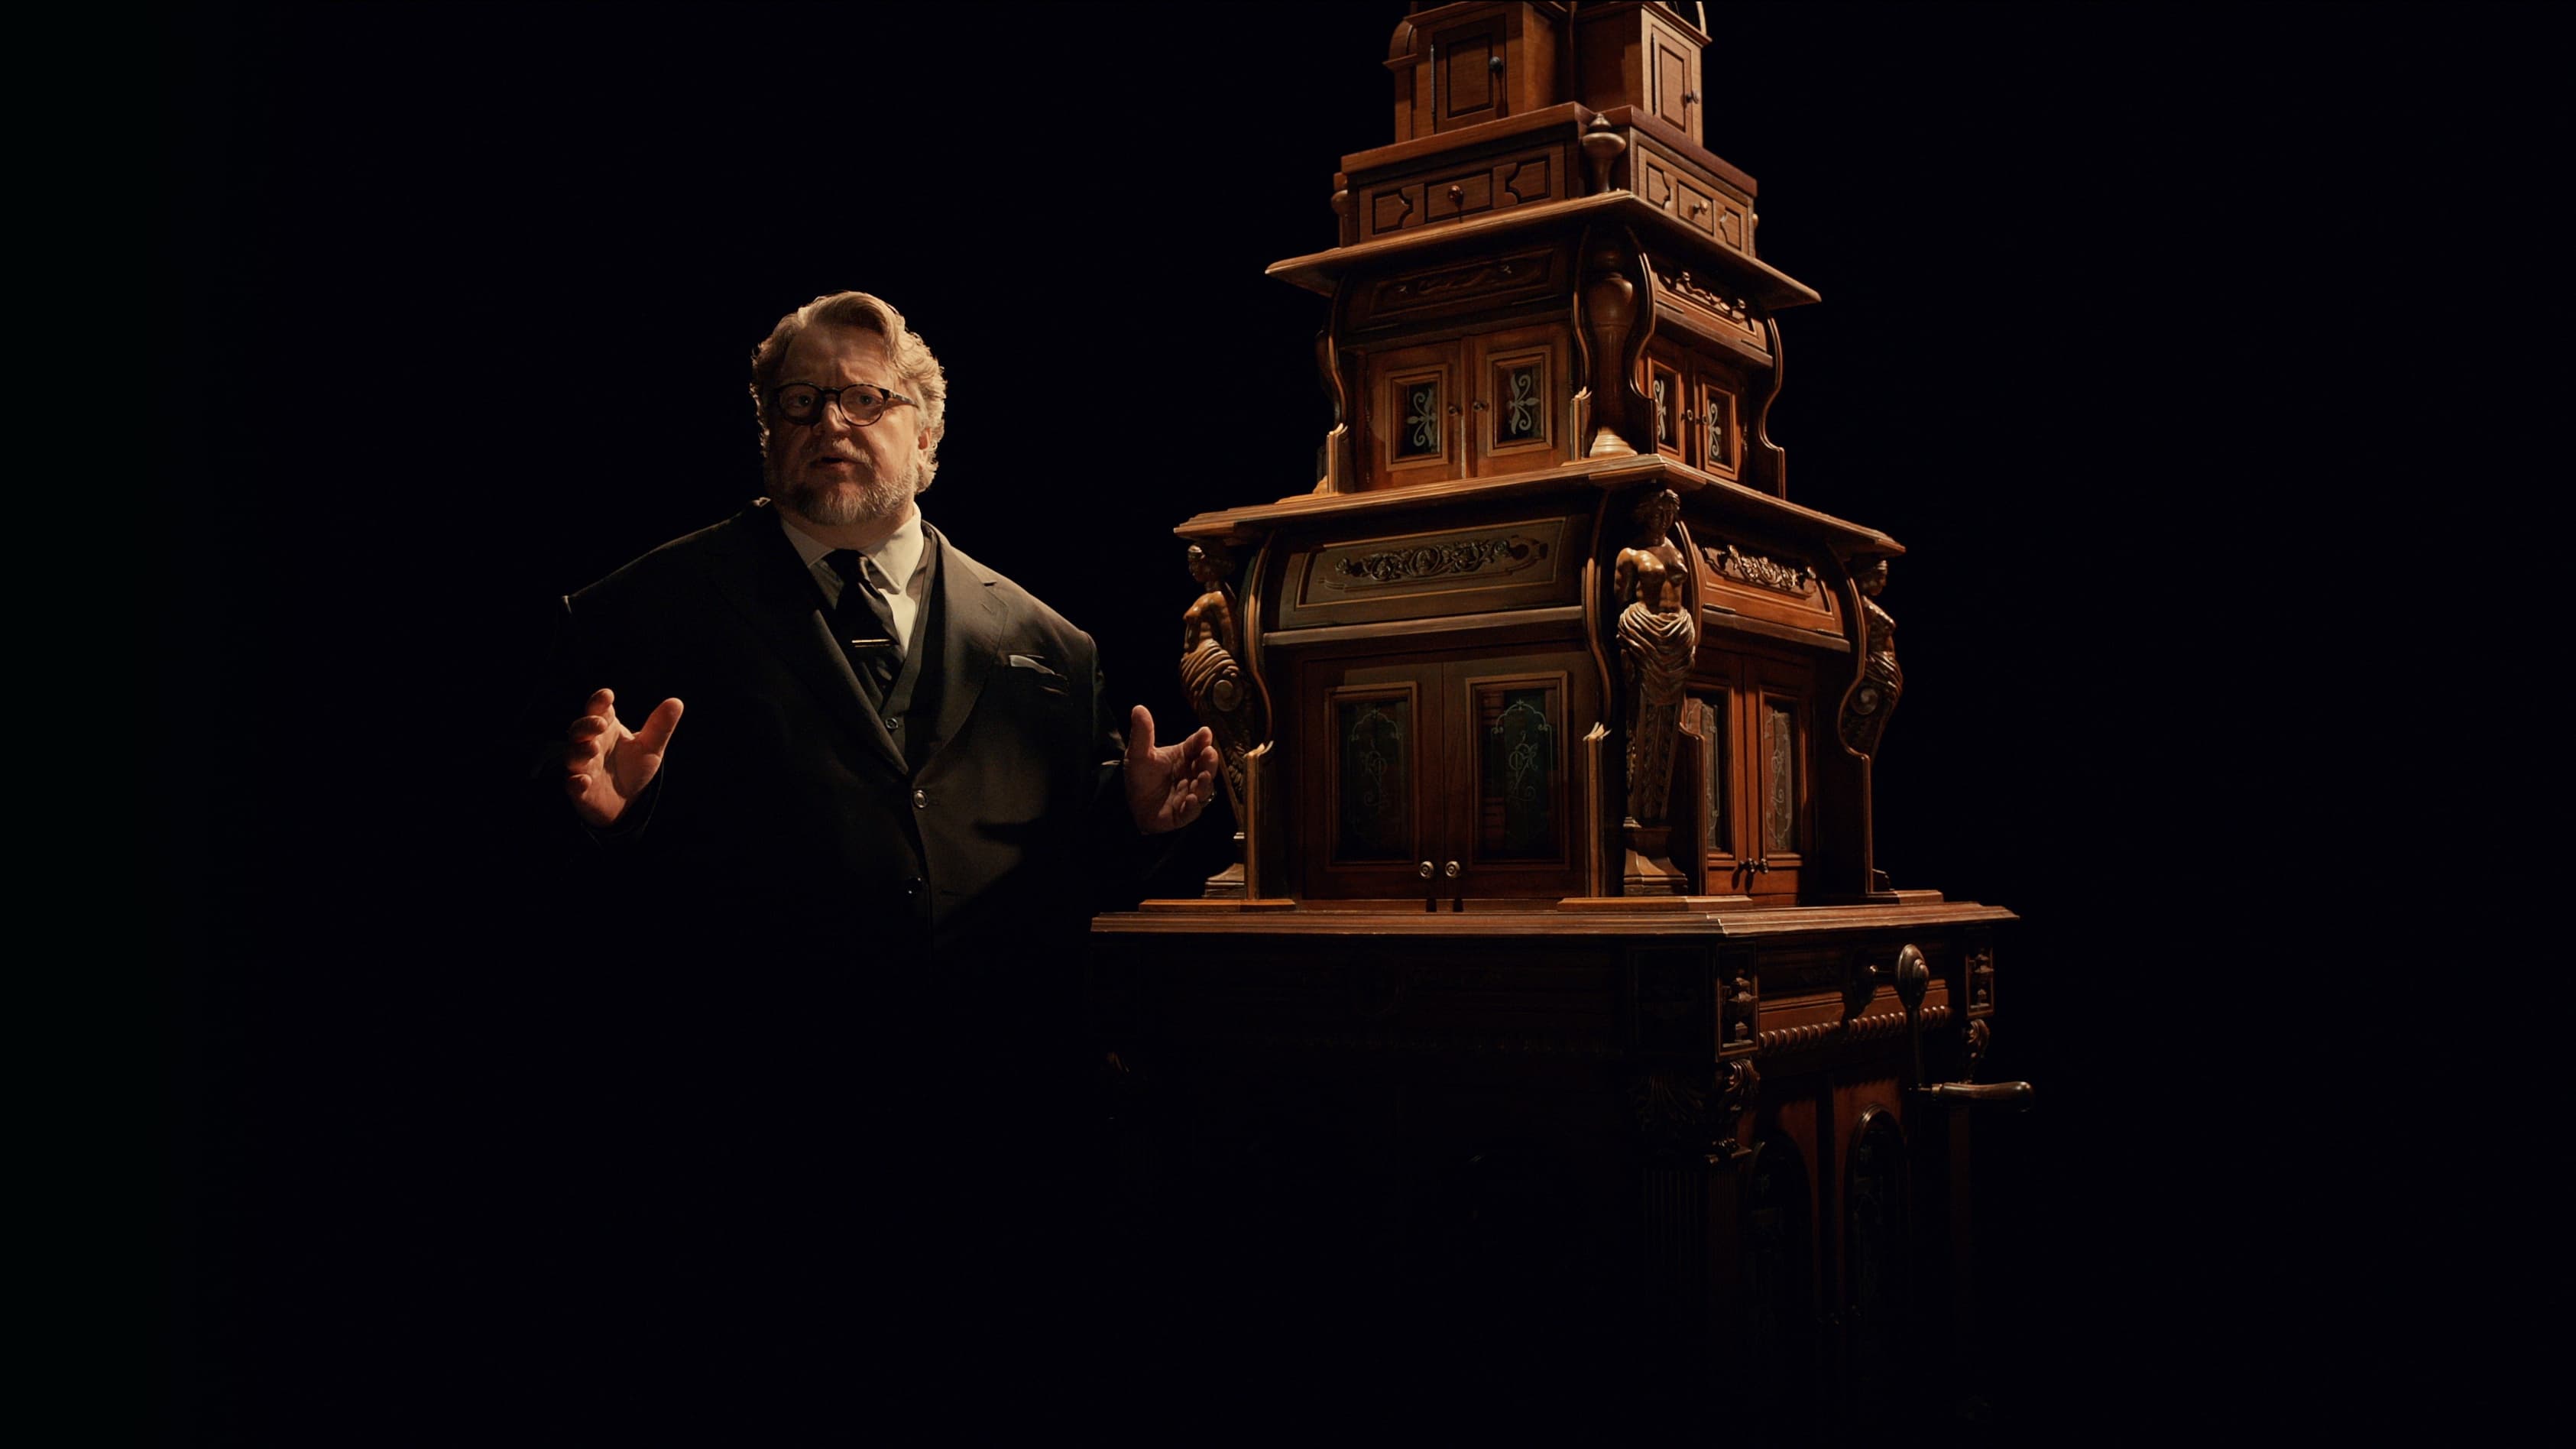 Guillermo del Toro's Cabinet of Curiosities poster